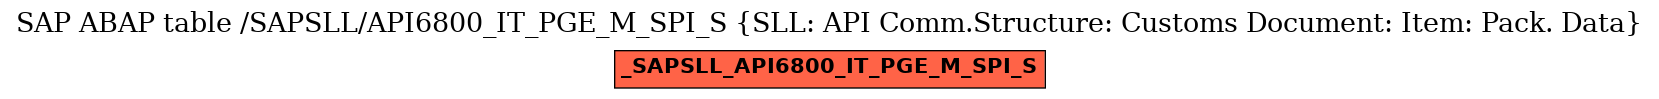 E-R Diagram for table /SAPSLL/API6800_IT_PGE_M_SPI_S (SLL: API Comm.Structure: Customs Document: Item: Pack. Data)